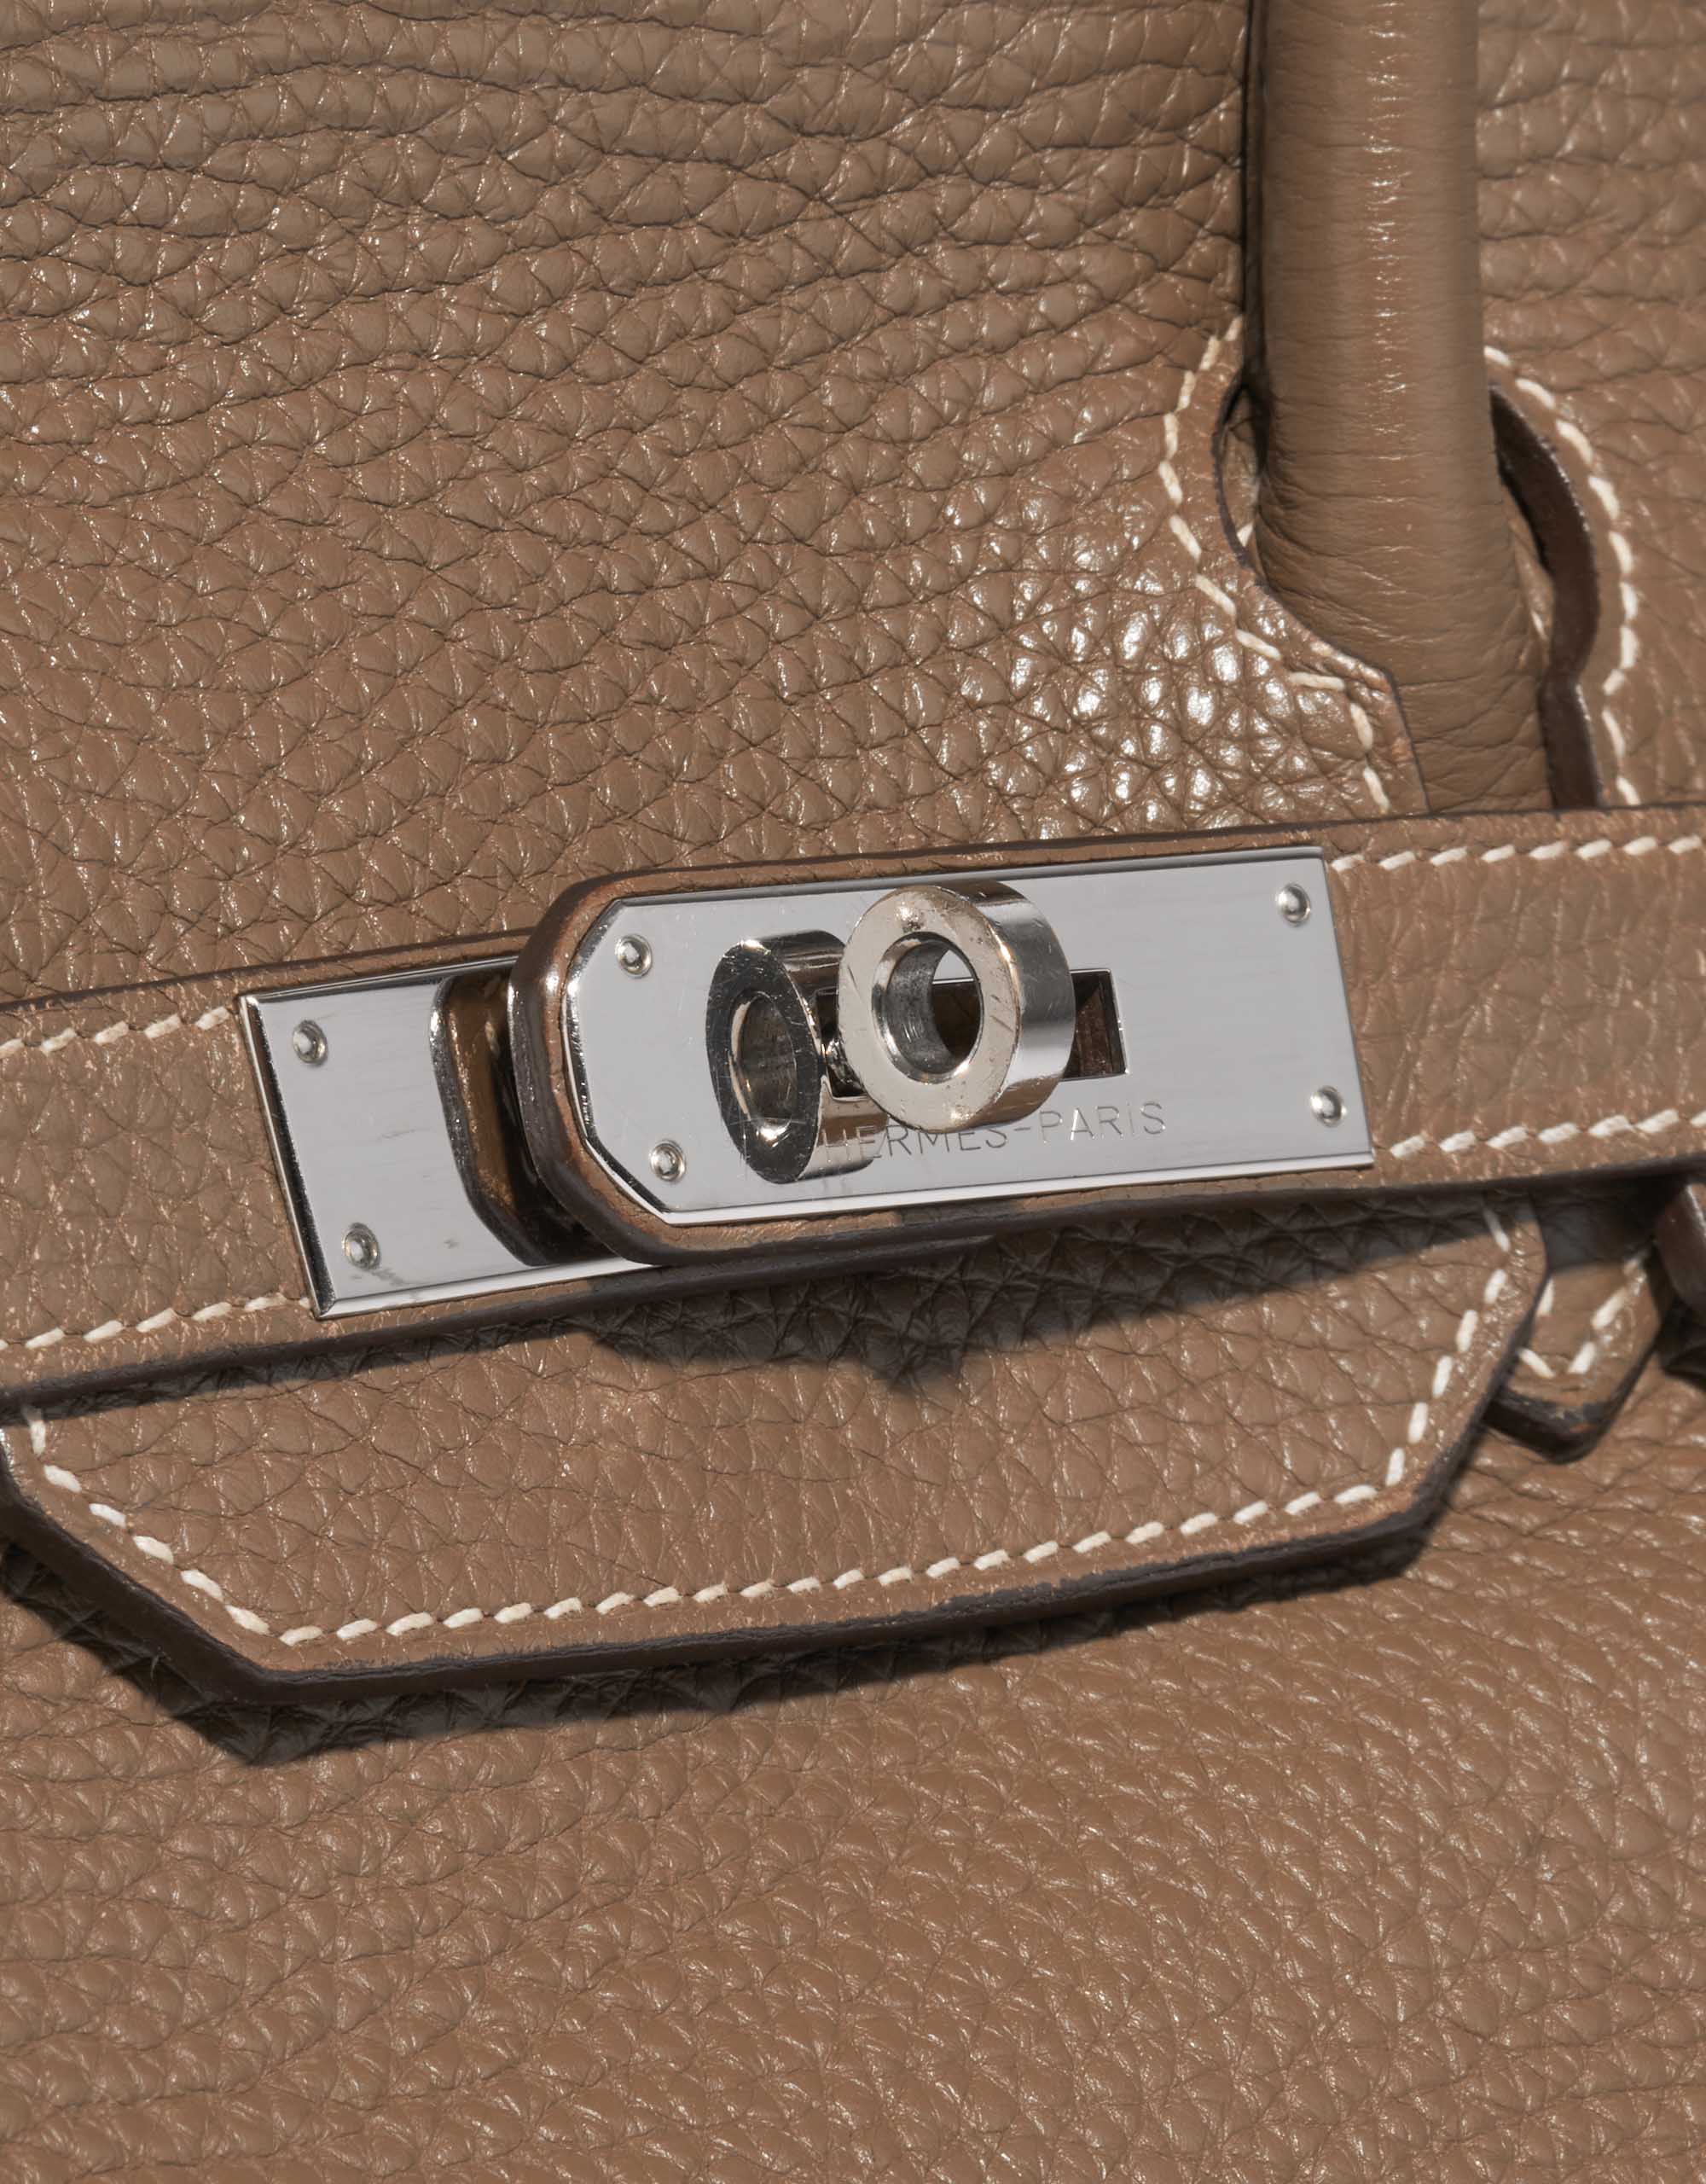 HERMÈS Birkin 30 handbag in Etoupe Clemence leather with Palladium